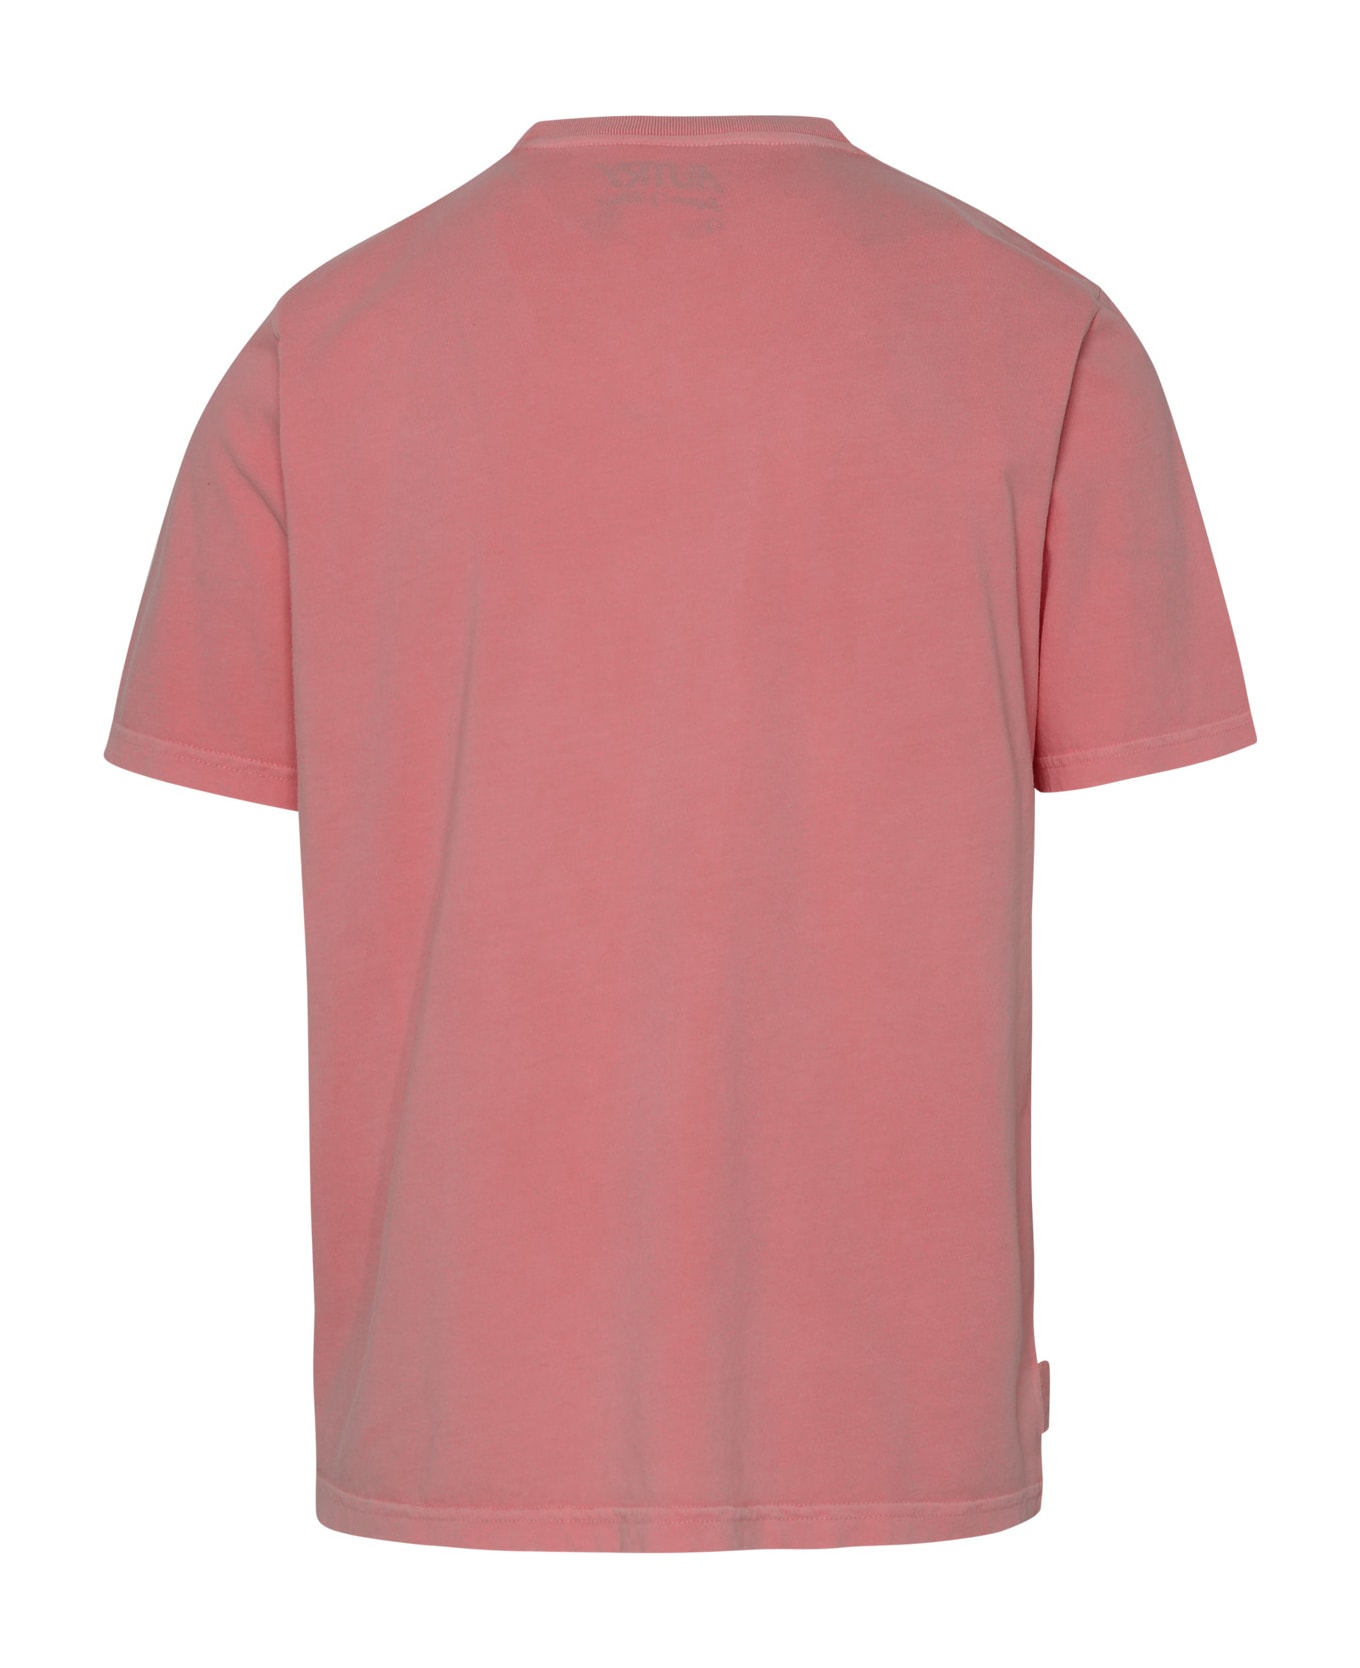 Autry Supervintage Man Tinto Pink Cotton Garment Dyed T-shirt - Rosa